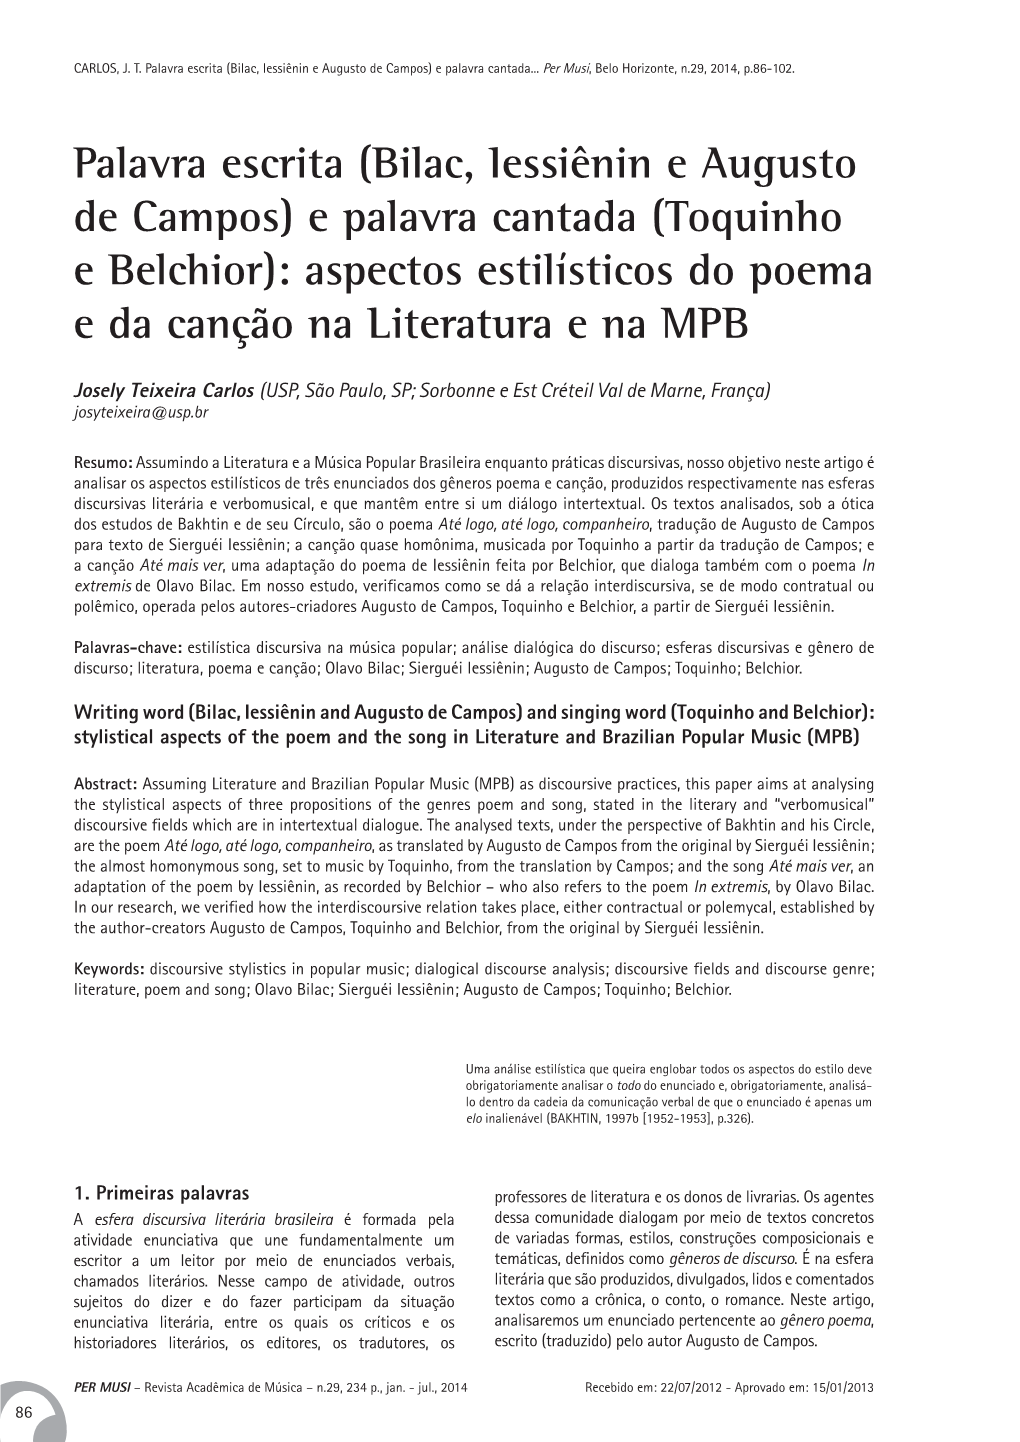 Download PDF (Português)